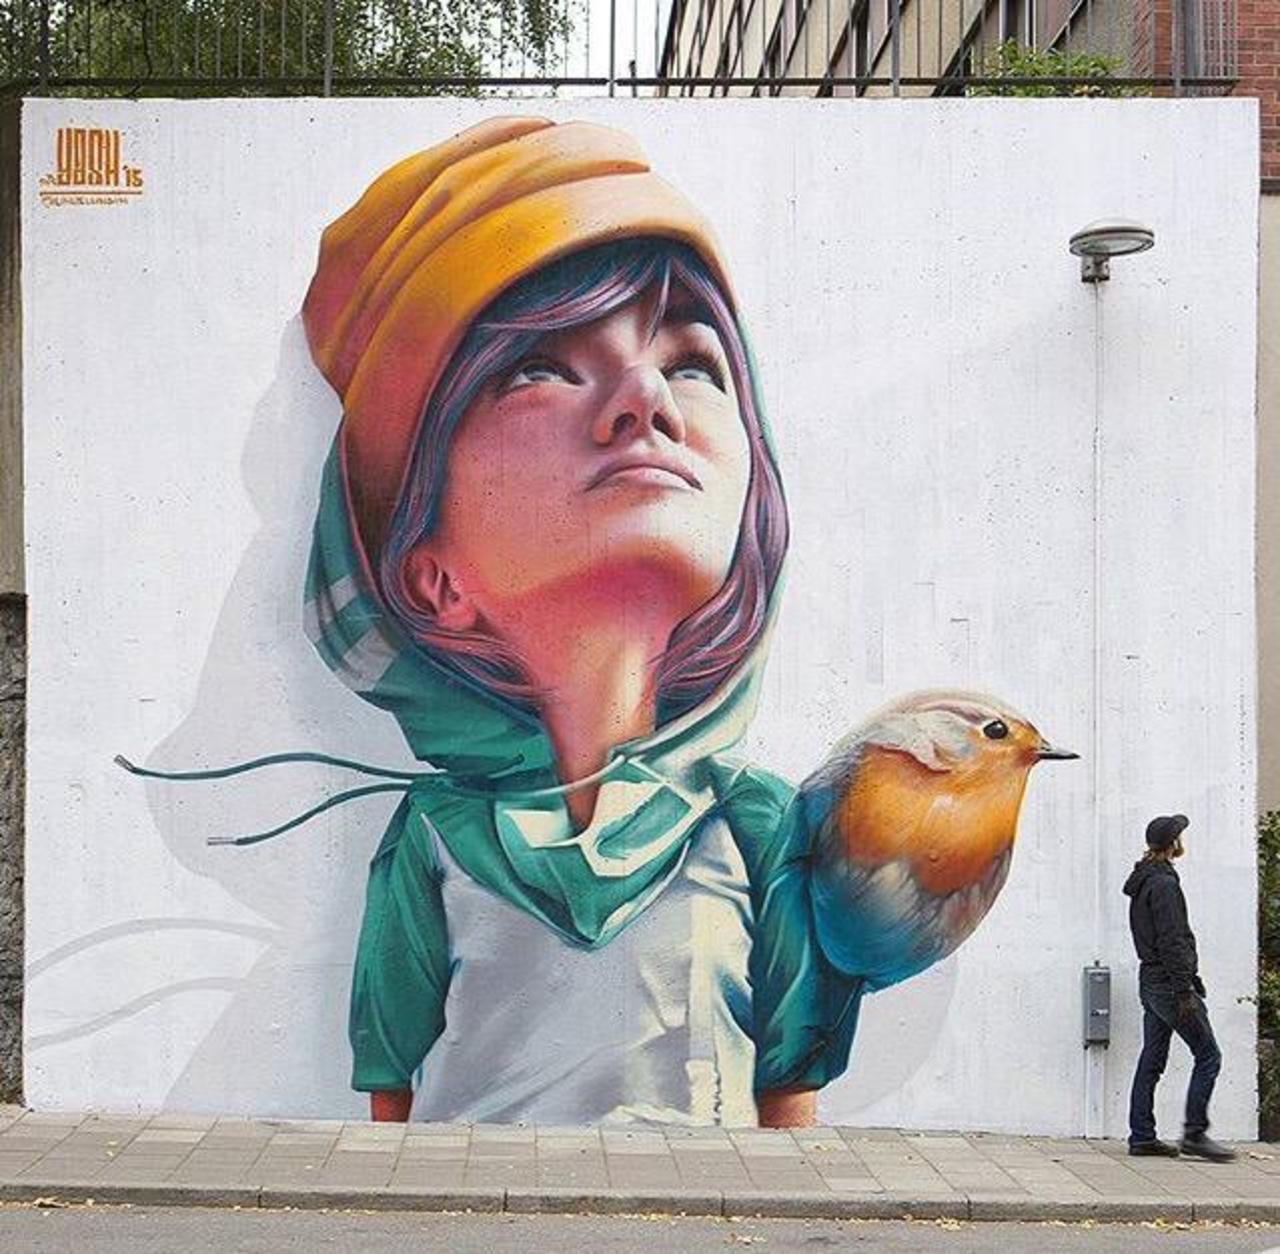 New Street Art by Yash 

#art #graffiti #mural #streetart http://t.co/cIcdqEfAfb